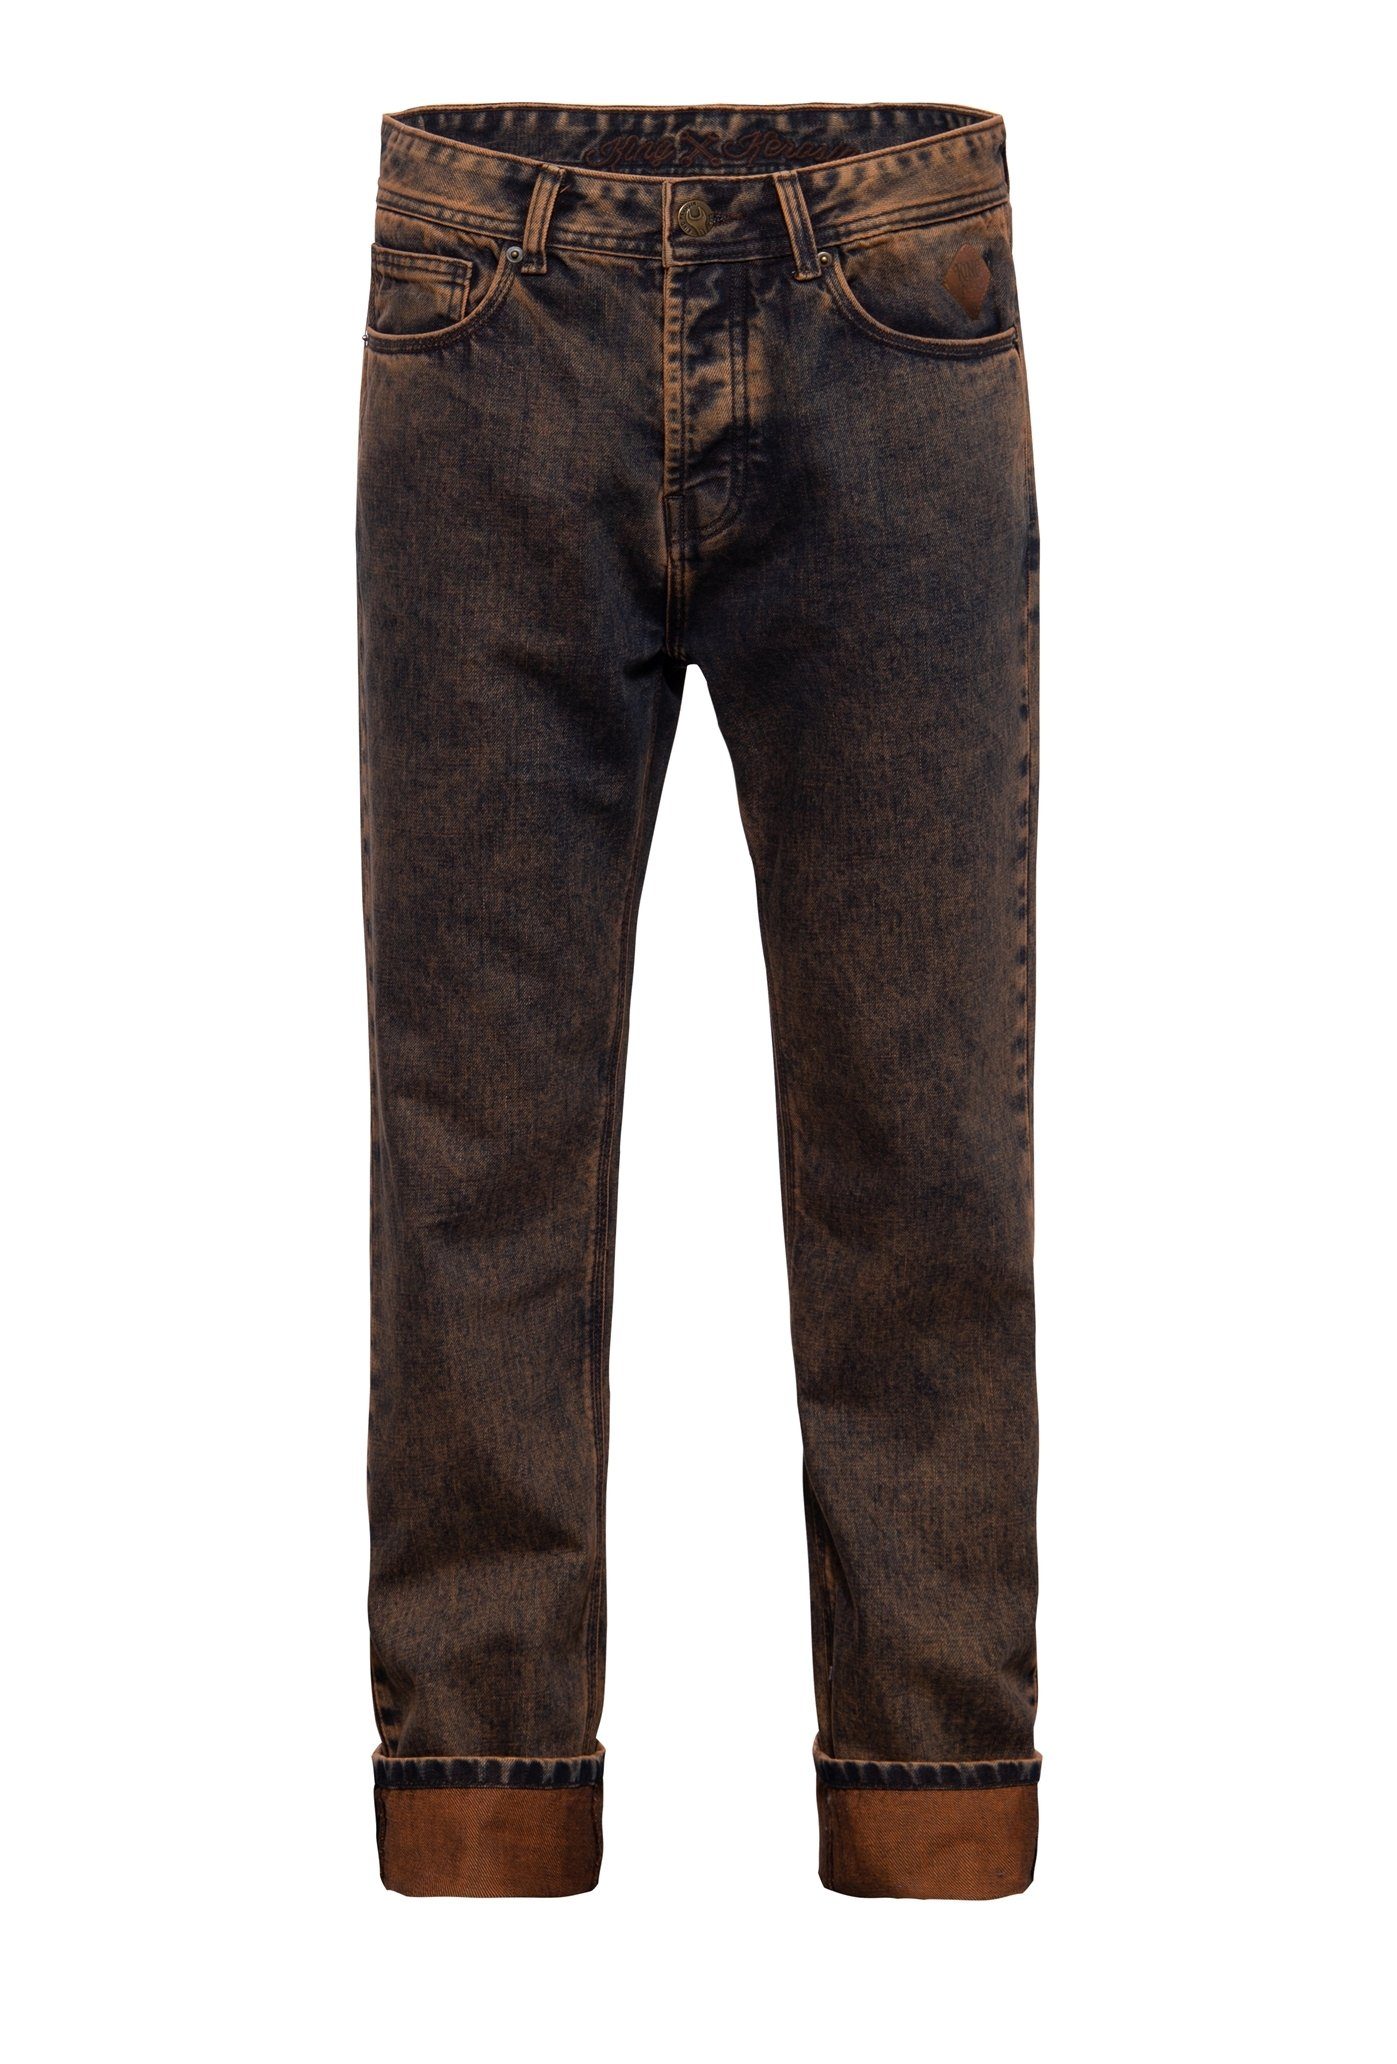 KingKerosin 5-Pocket-Jeans Scott rostbraun Dirt Washed